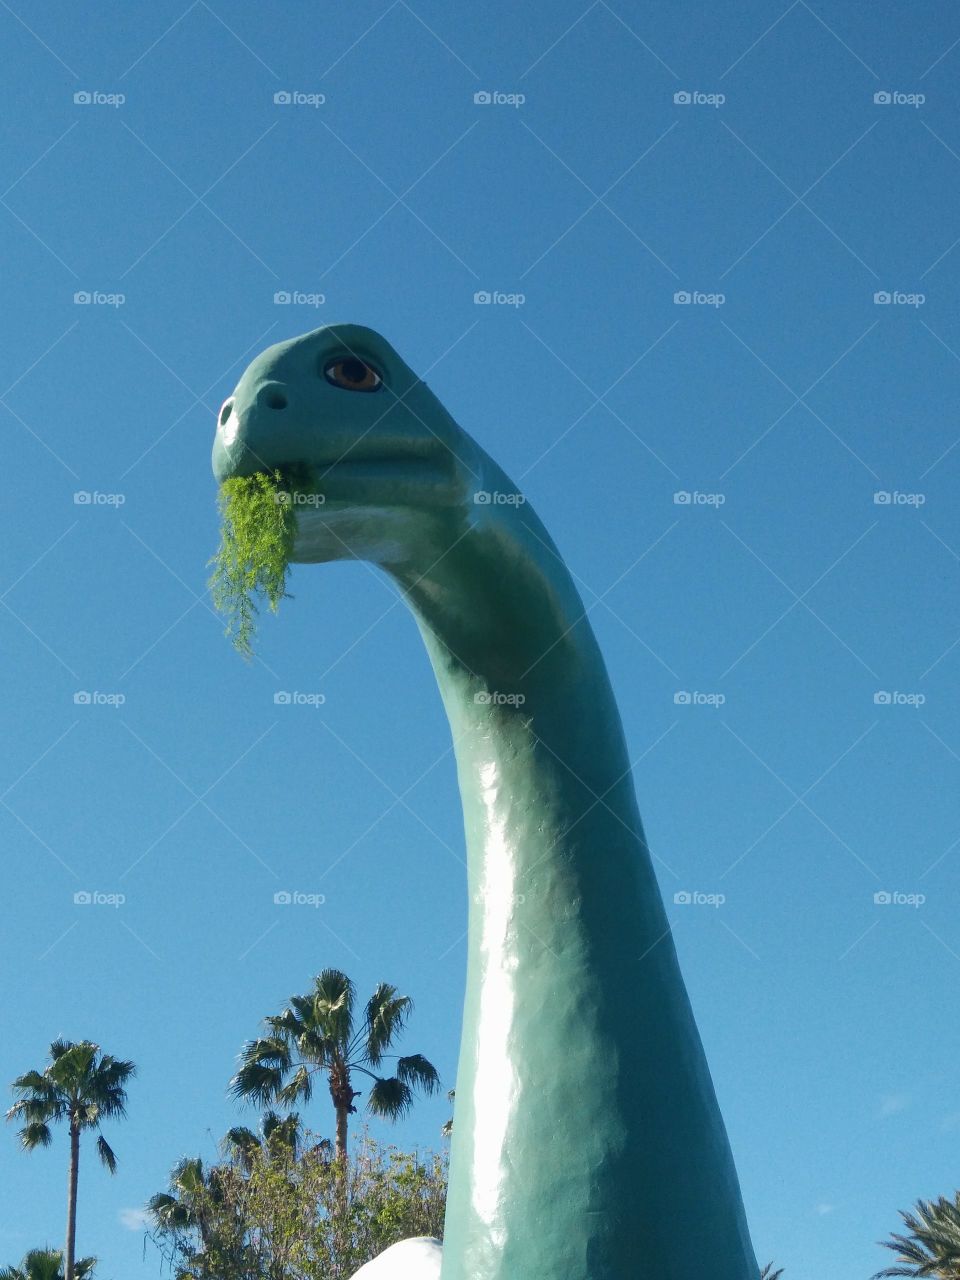 Cute dinosaur eating plants at Disney